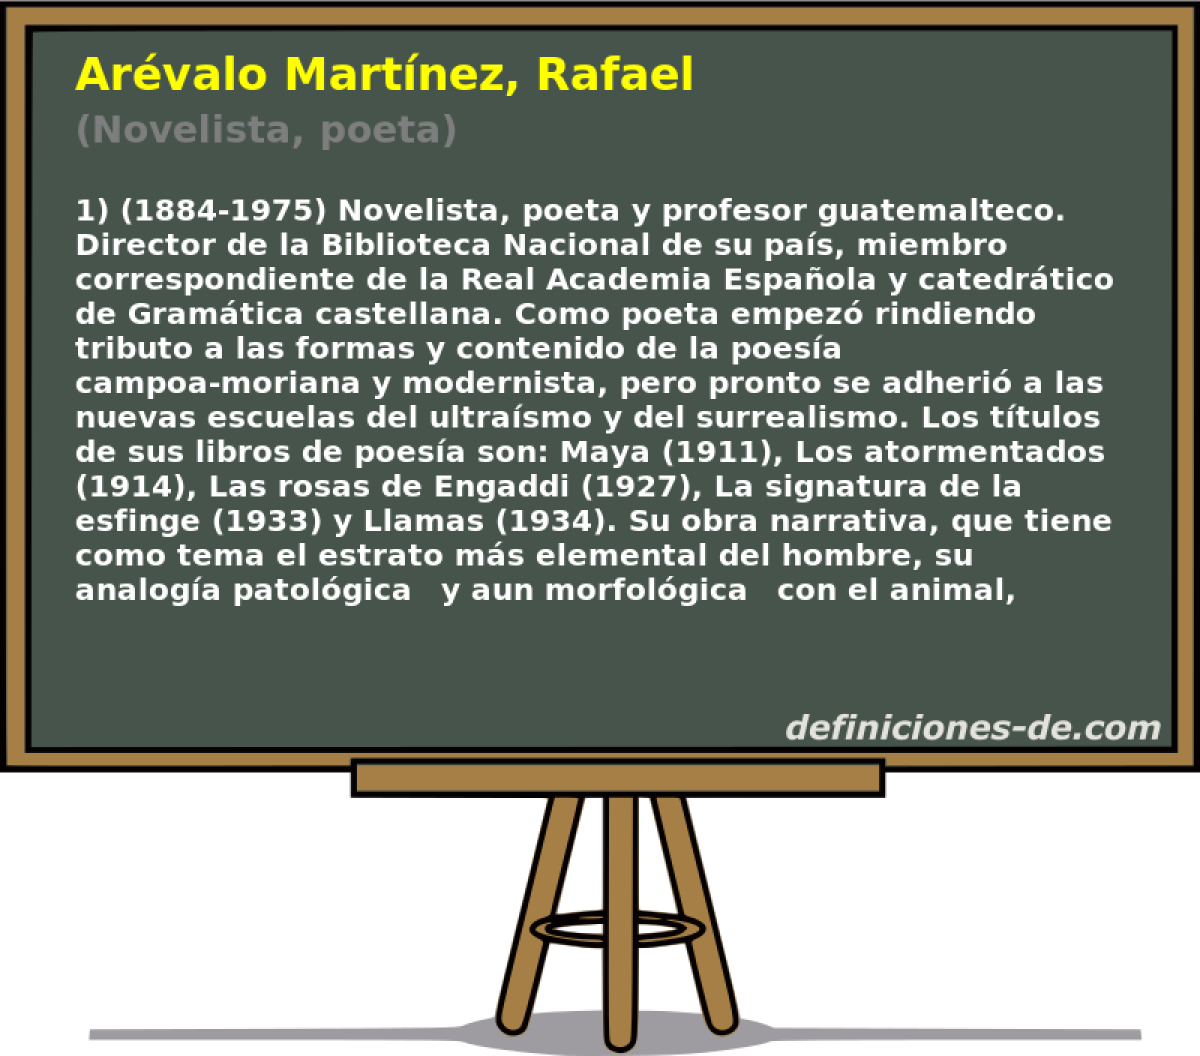 Arvalo Martnez, Rafael (Novelista, poeta)